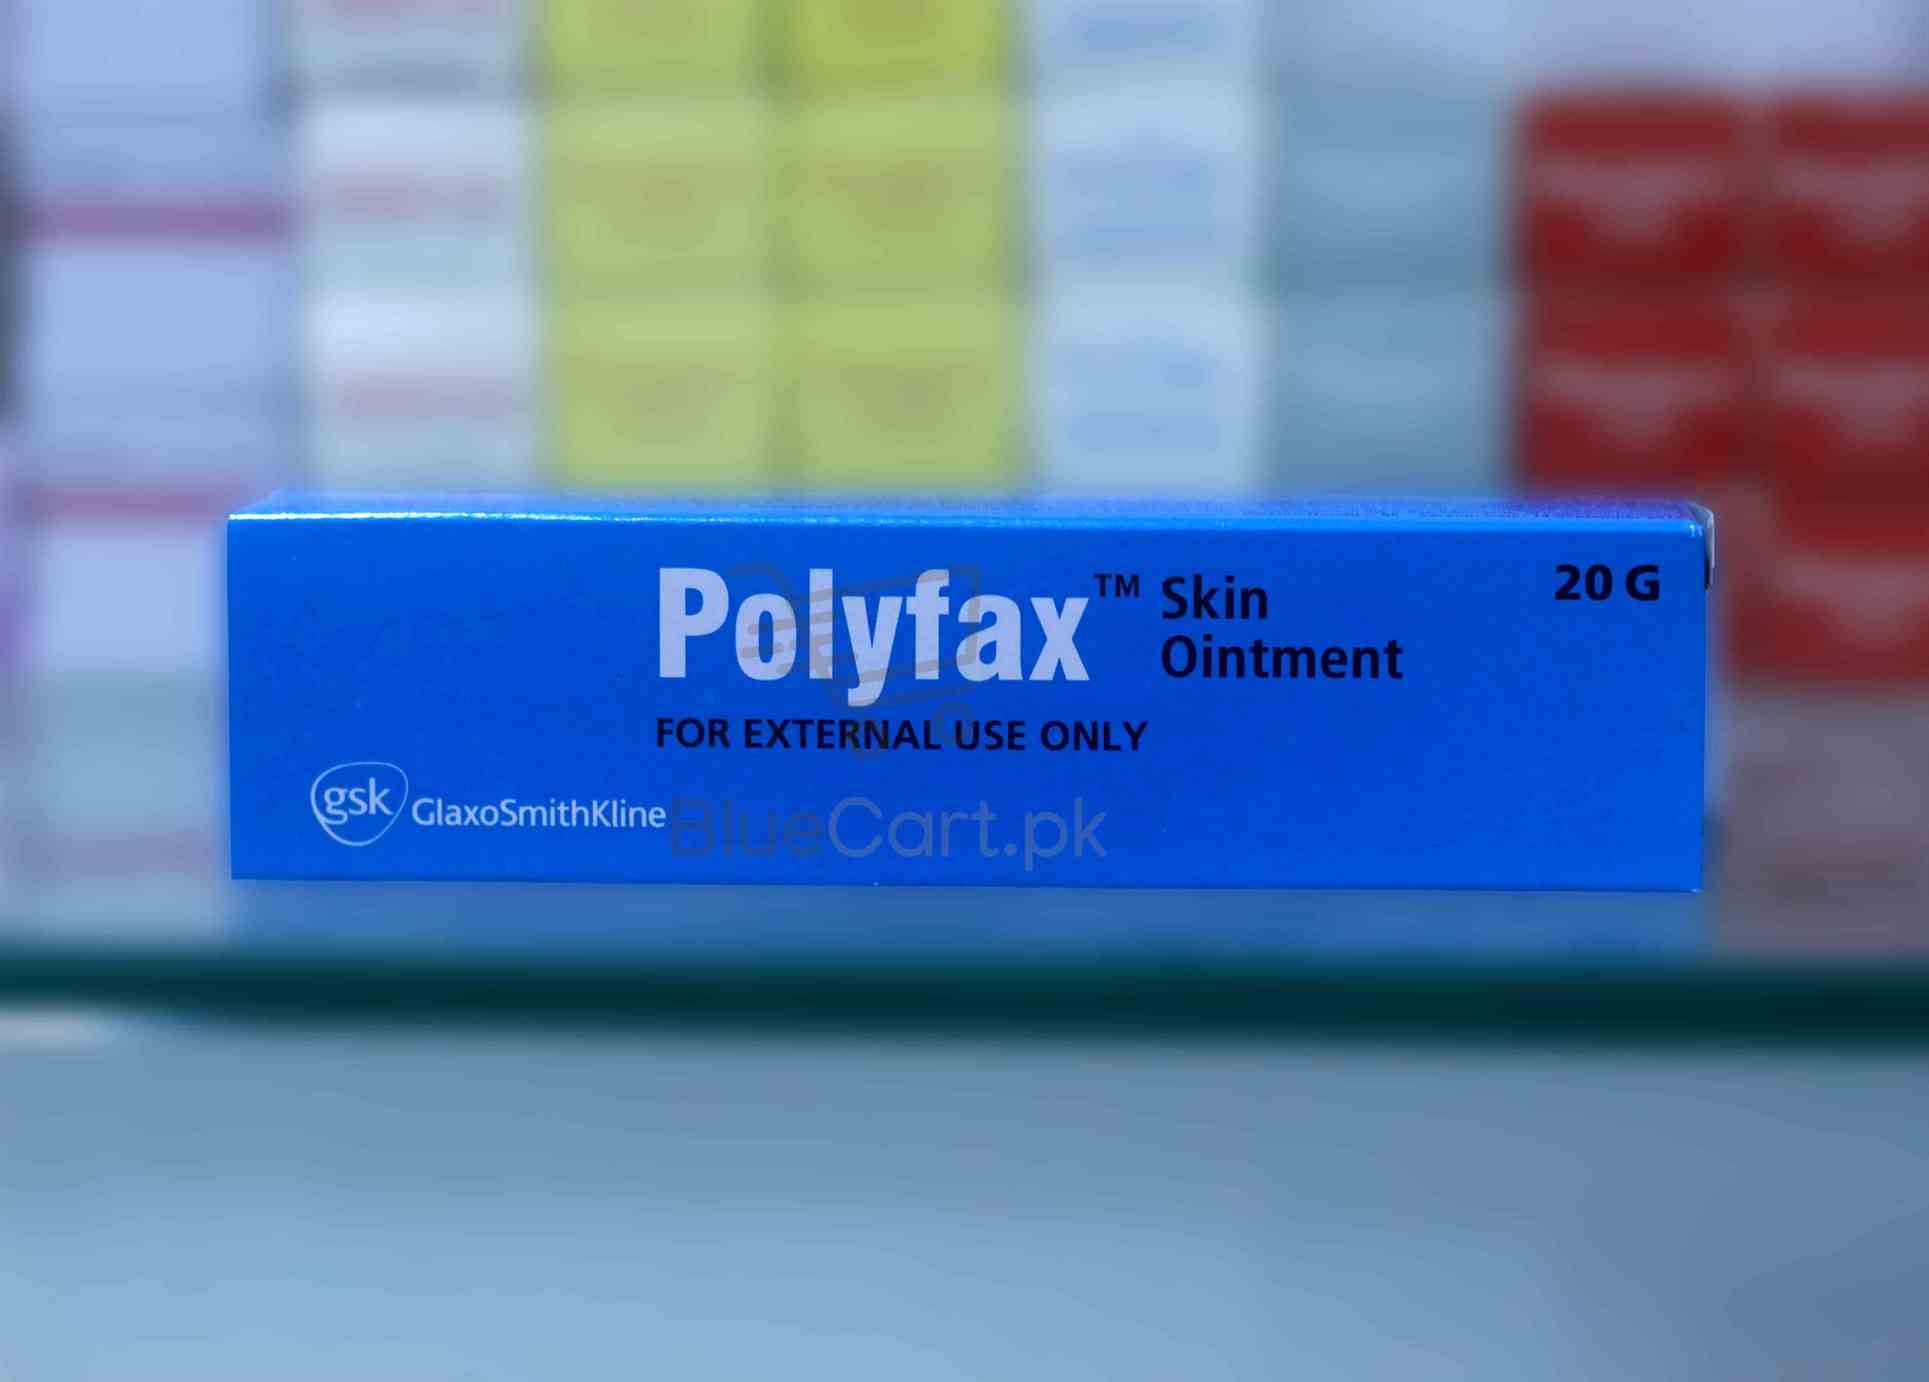 Polyfax Ointment